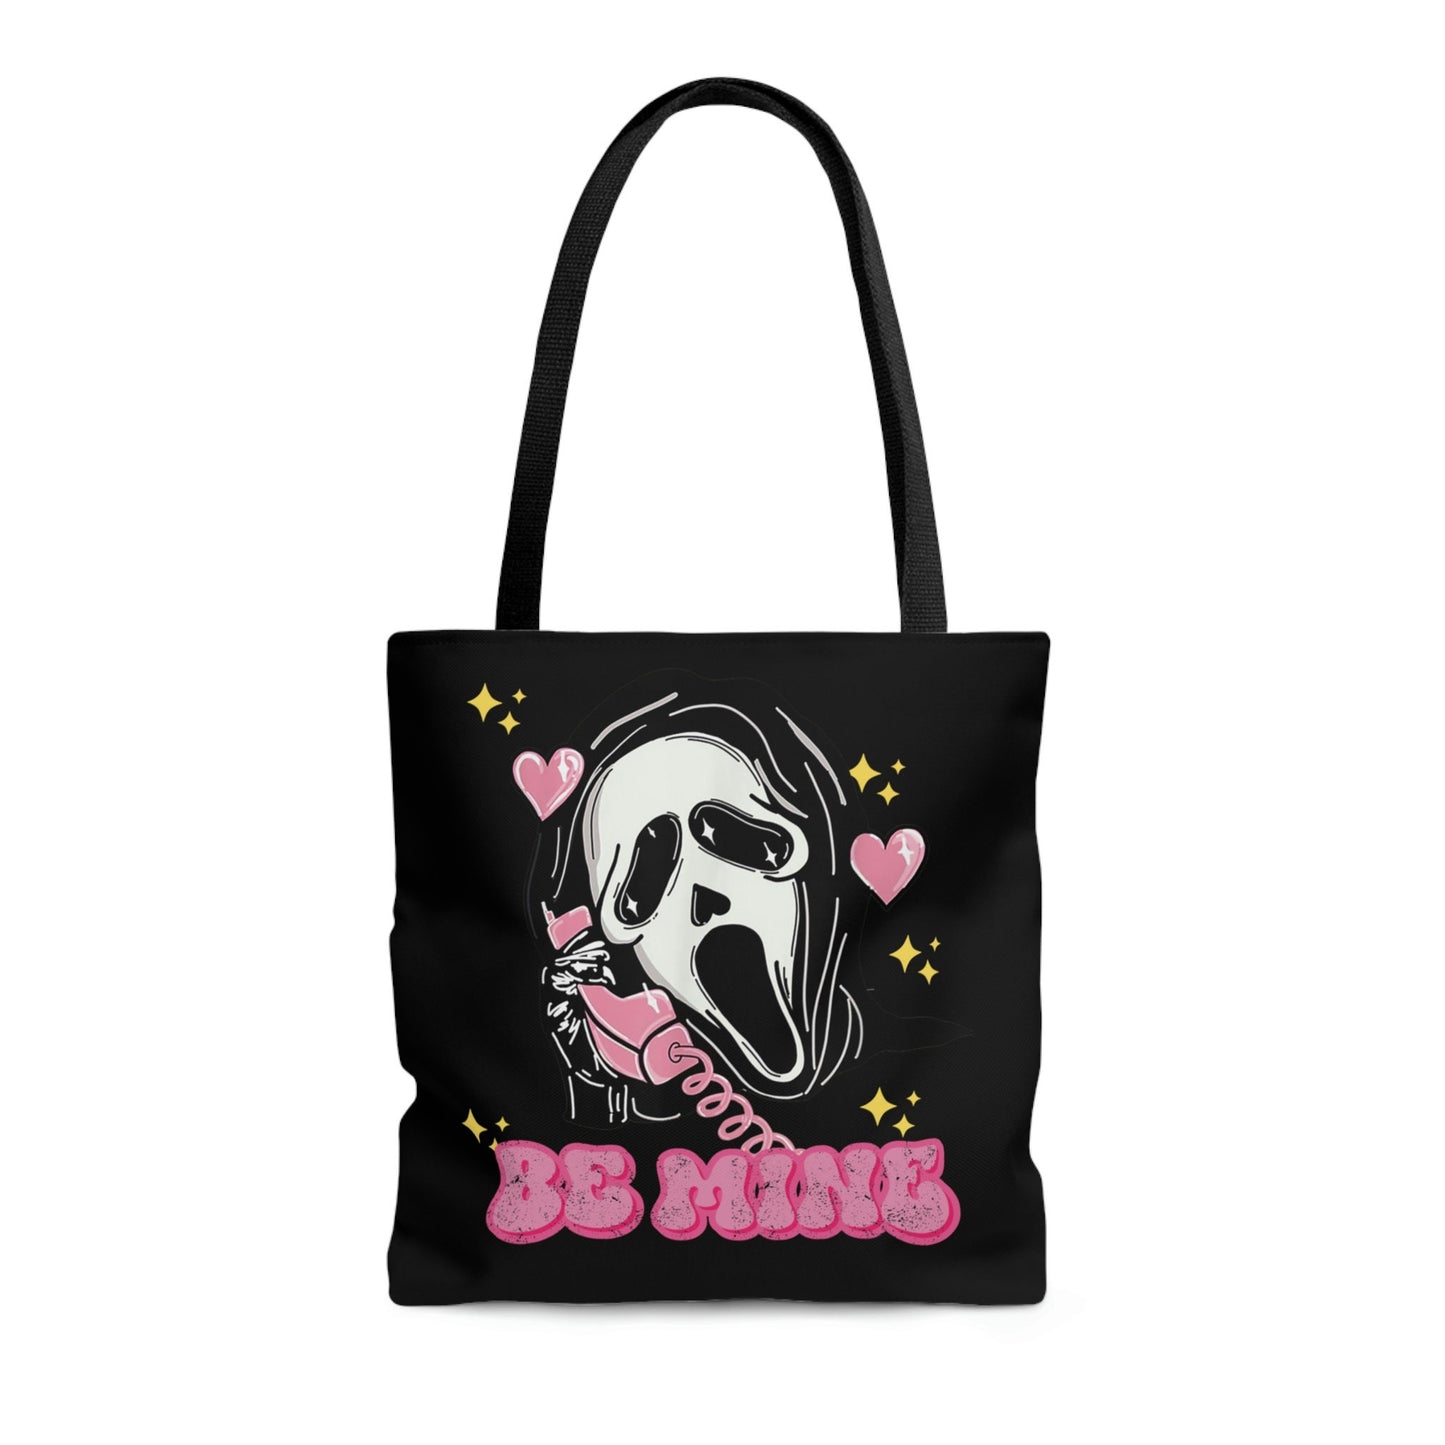 Ghostface tote bag, Gothic book bag, Scream merch, Spooky shopping bag, Horror bag, Horror merch